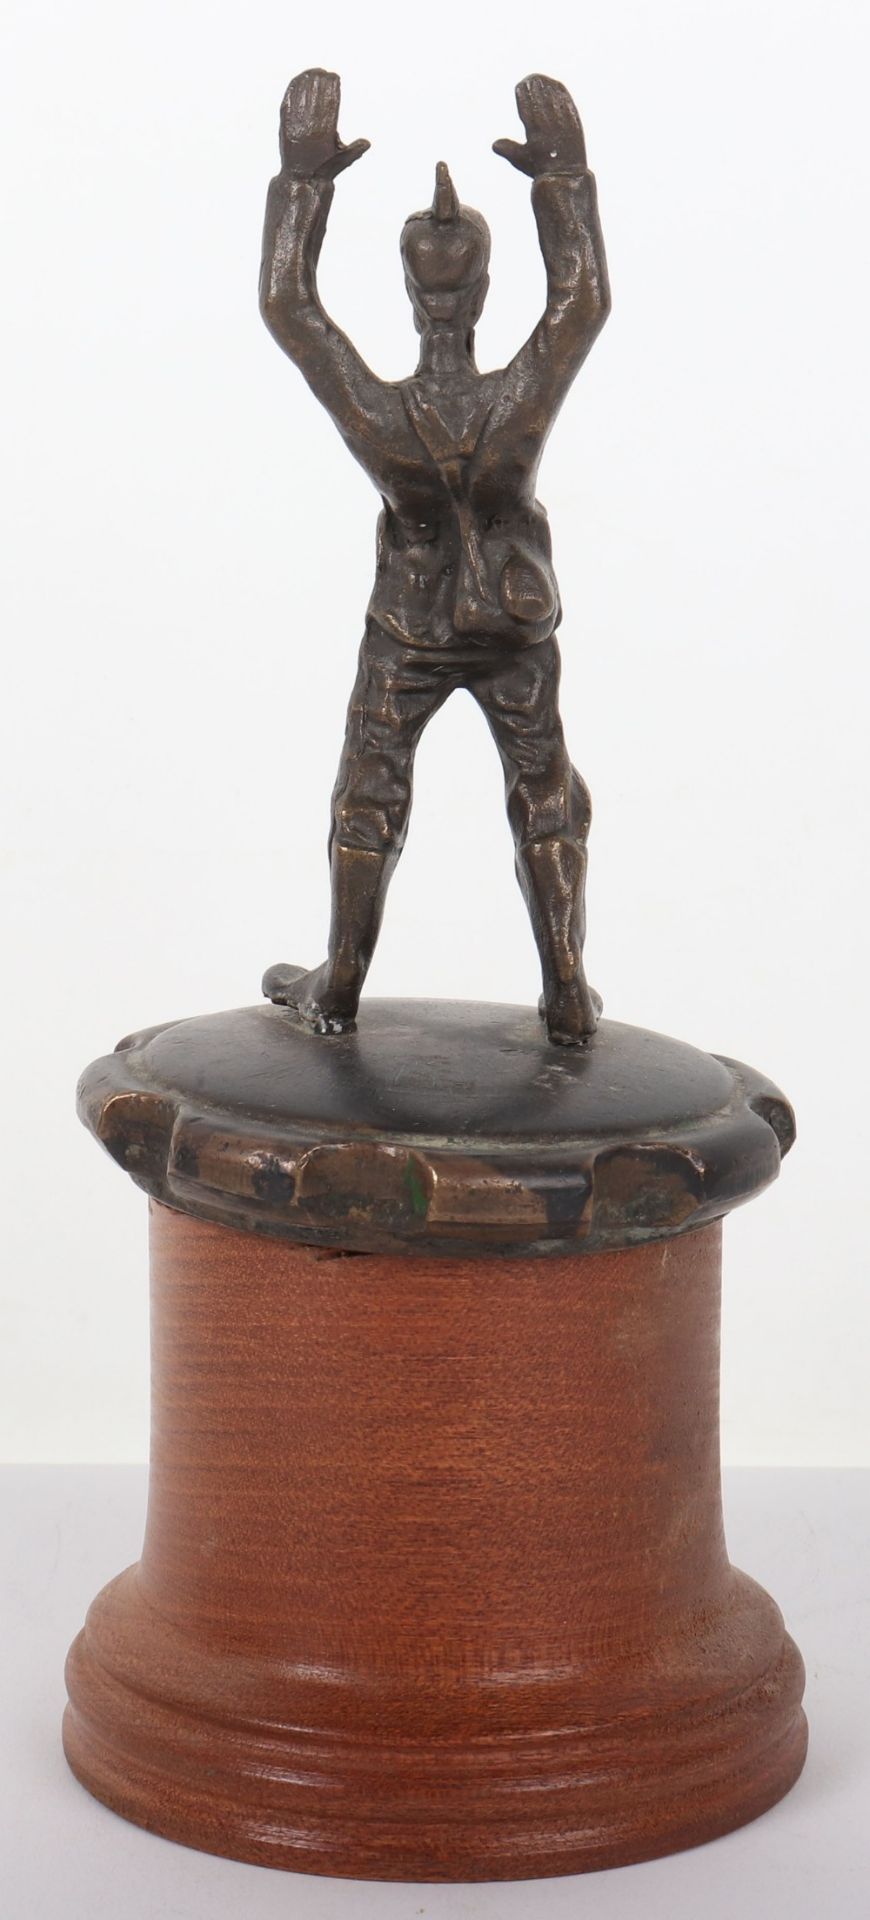 Bronze Figure of a Surrendering WW1 German Soldier - Image 3 of 6